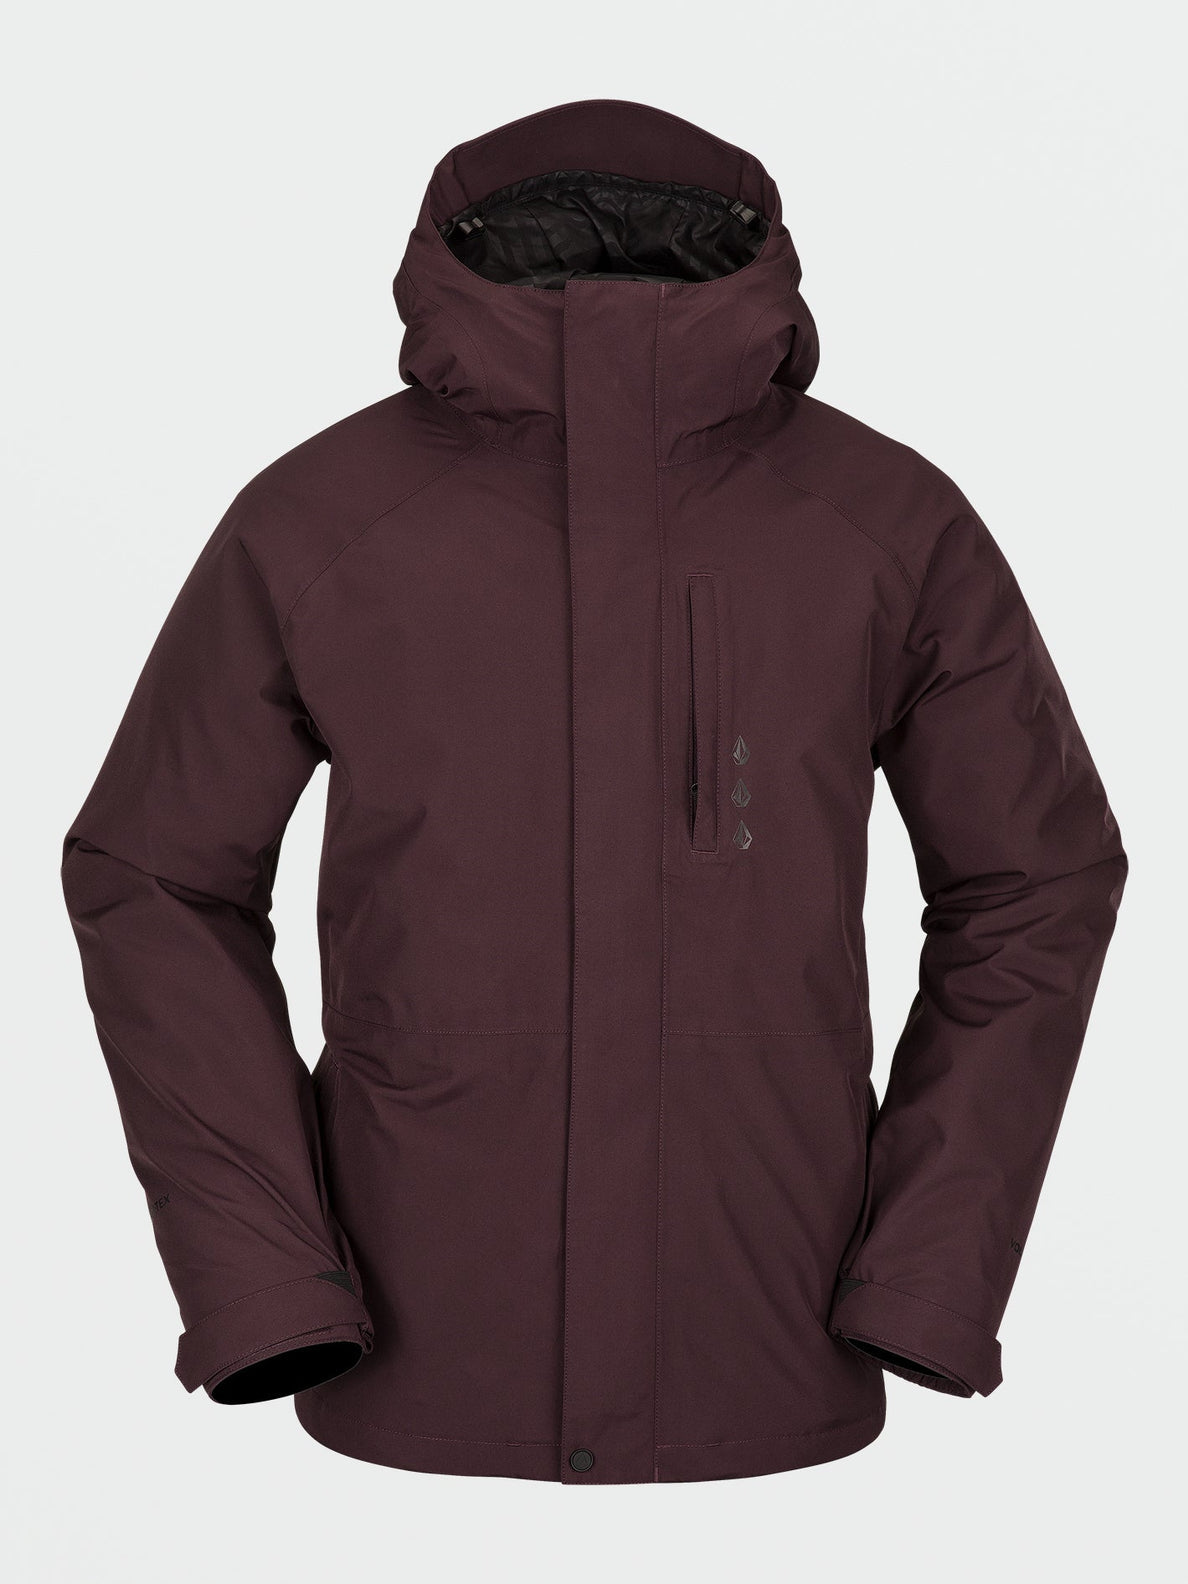 Volcom Dua Insulated Gore-Tex Jacket Snowboardjacke - Braun